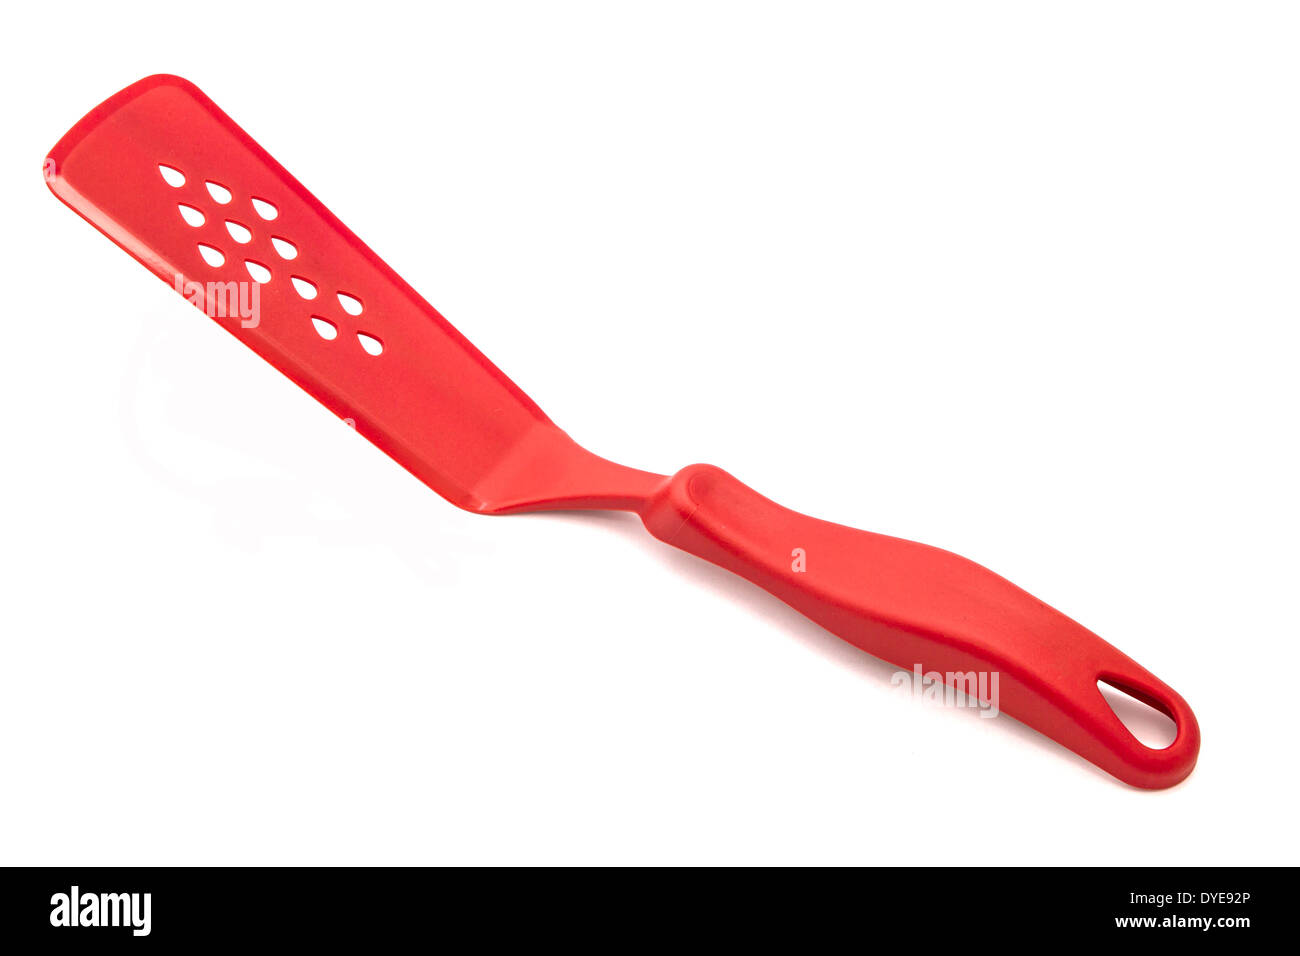 Red kitchen spatula on a white background Stock Photo